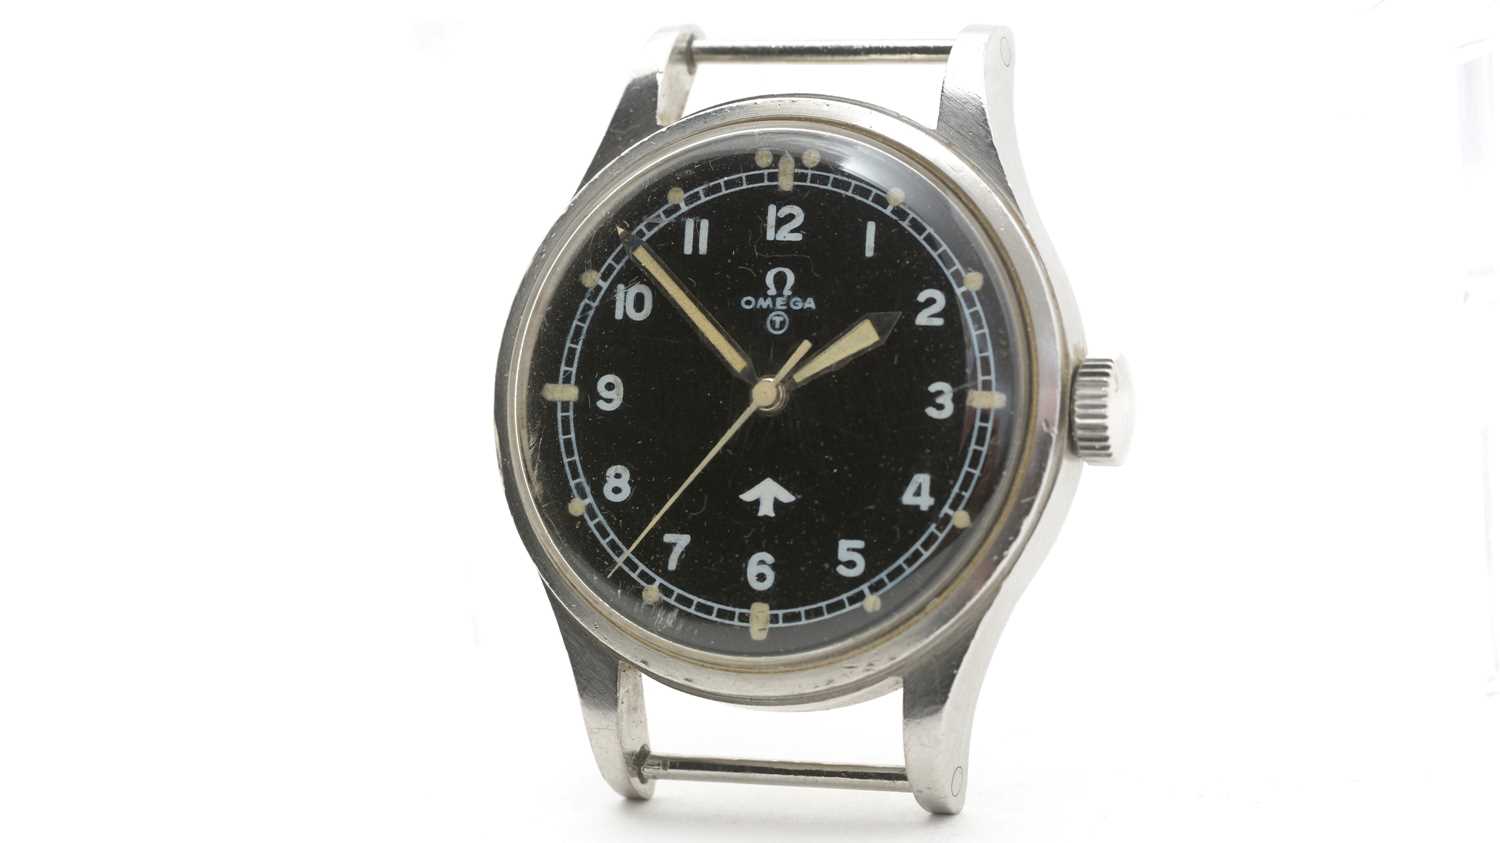 Lot 438 - Omega Military RAF: a steel-cased manual wind RAF Pilots wristwatch